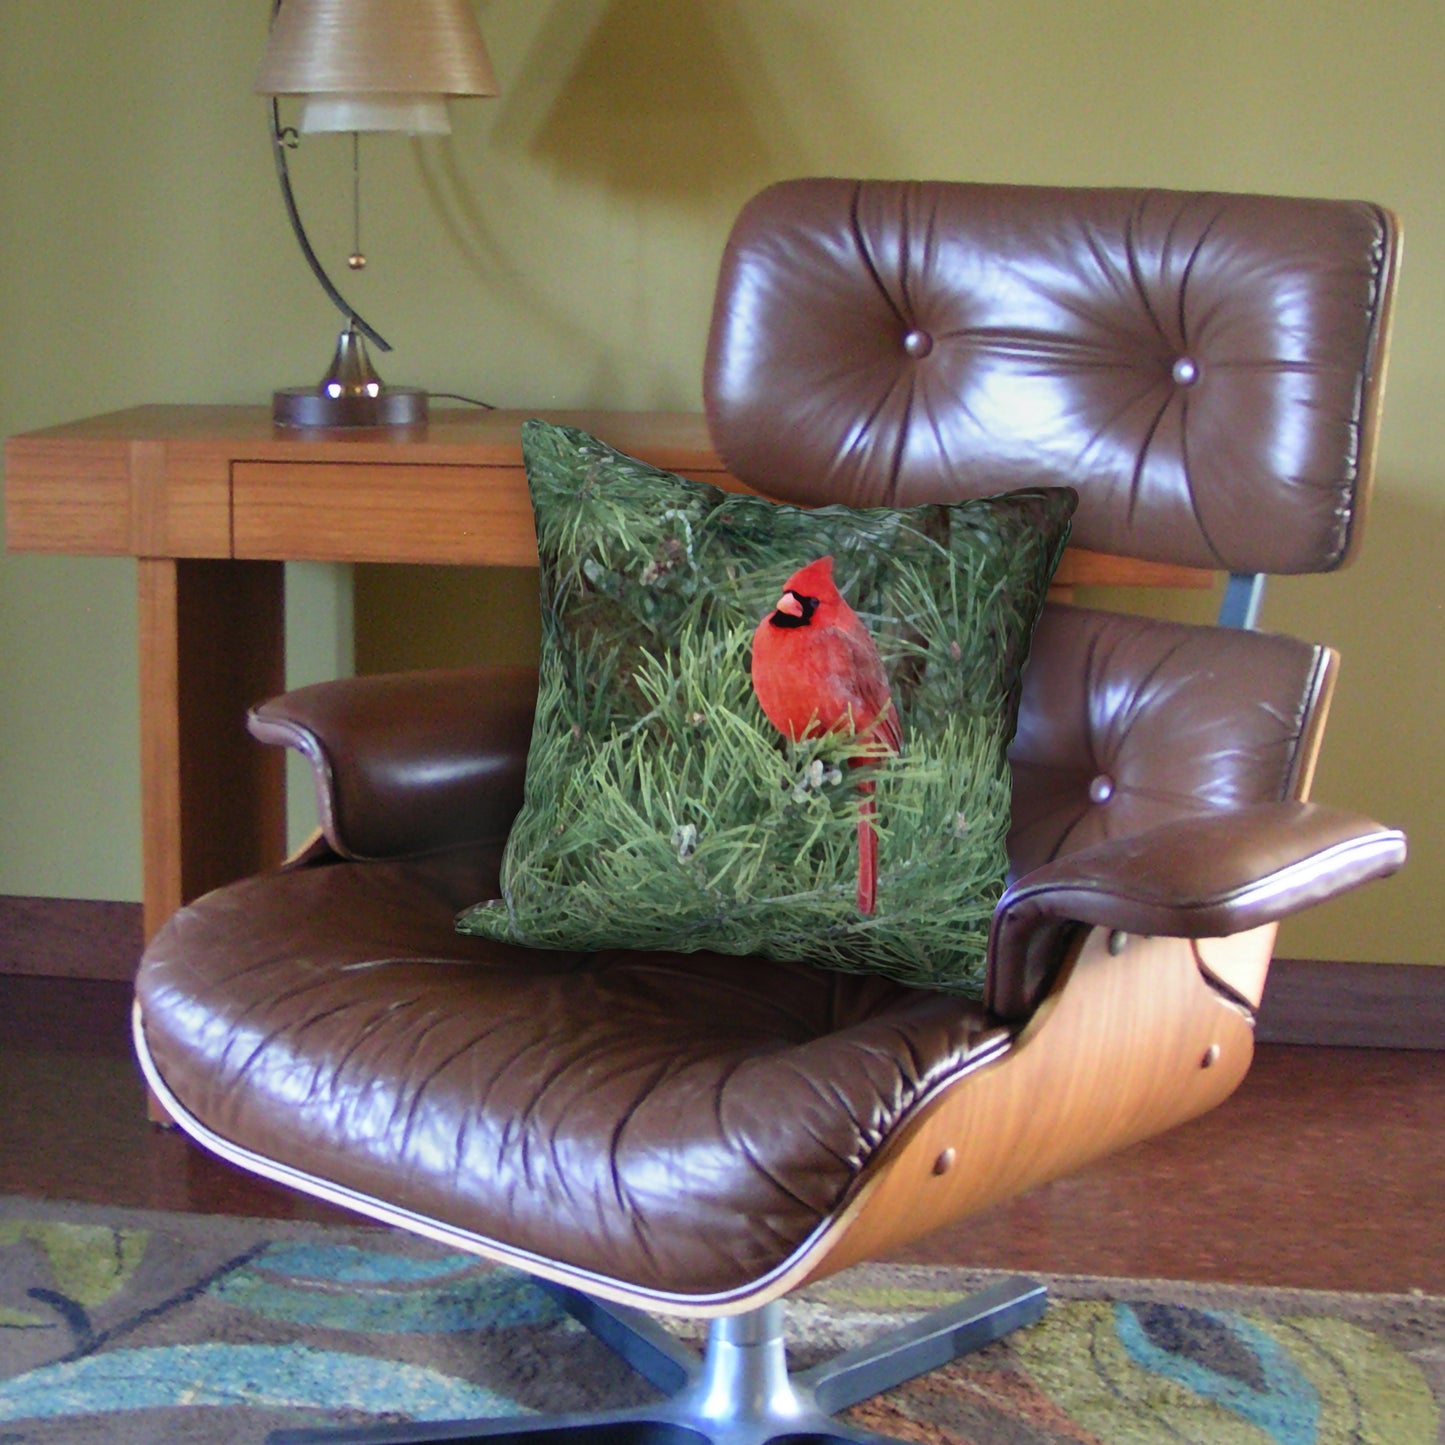 Cardinal in Tree Designer Pillow, 18"x18"